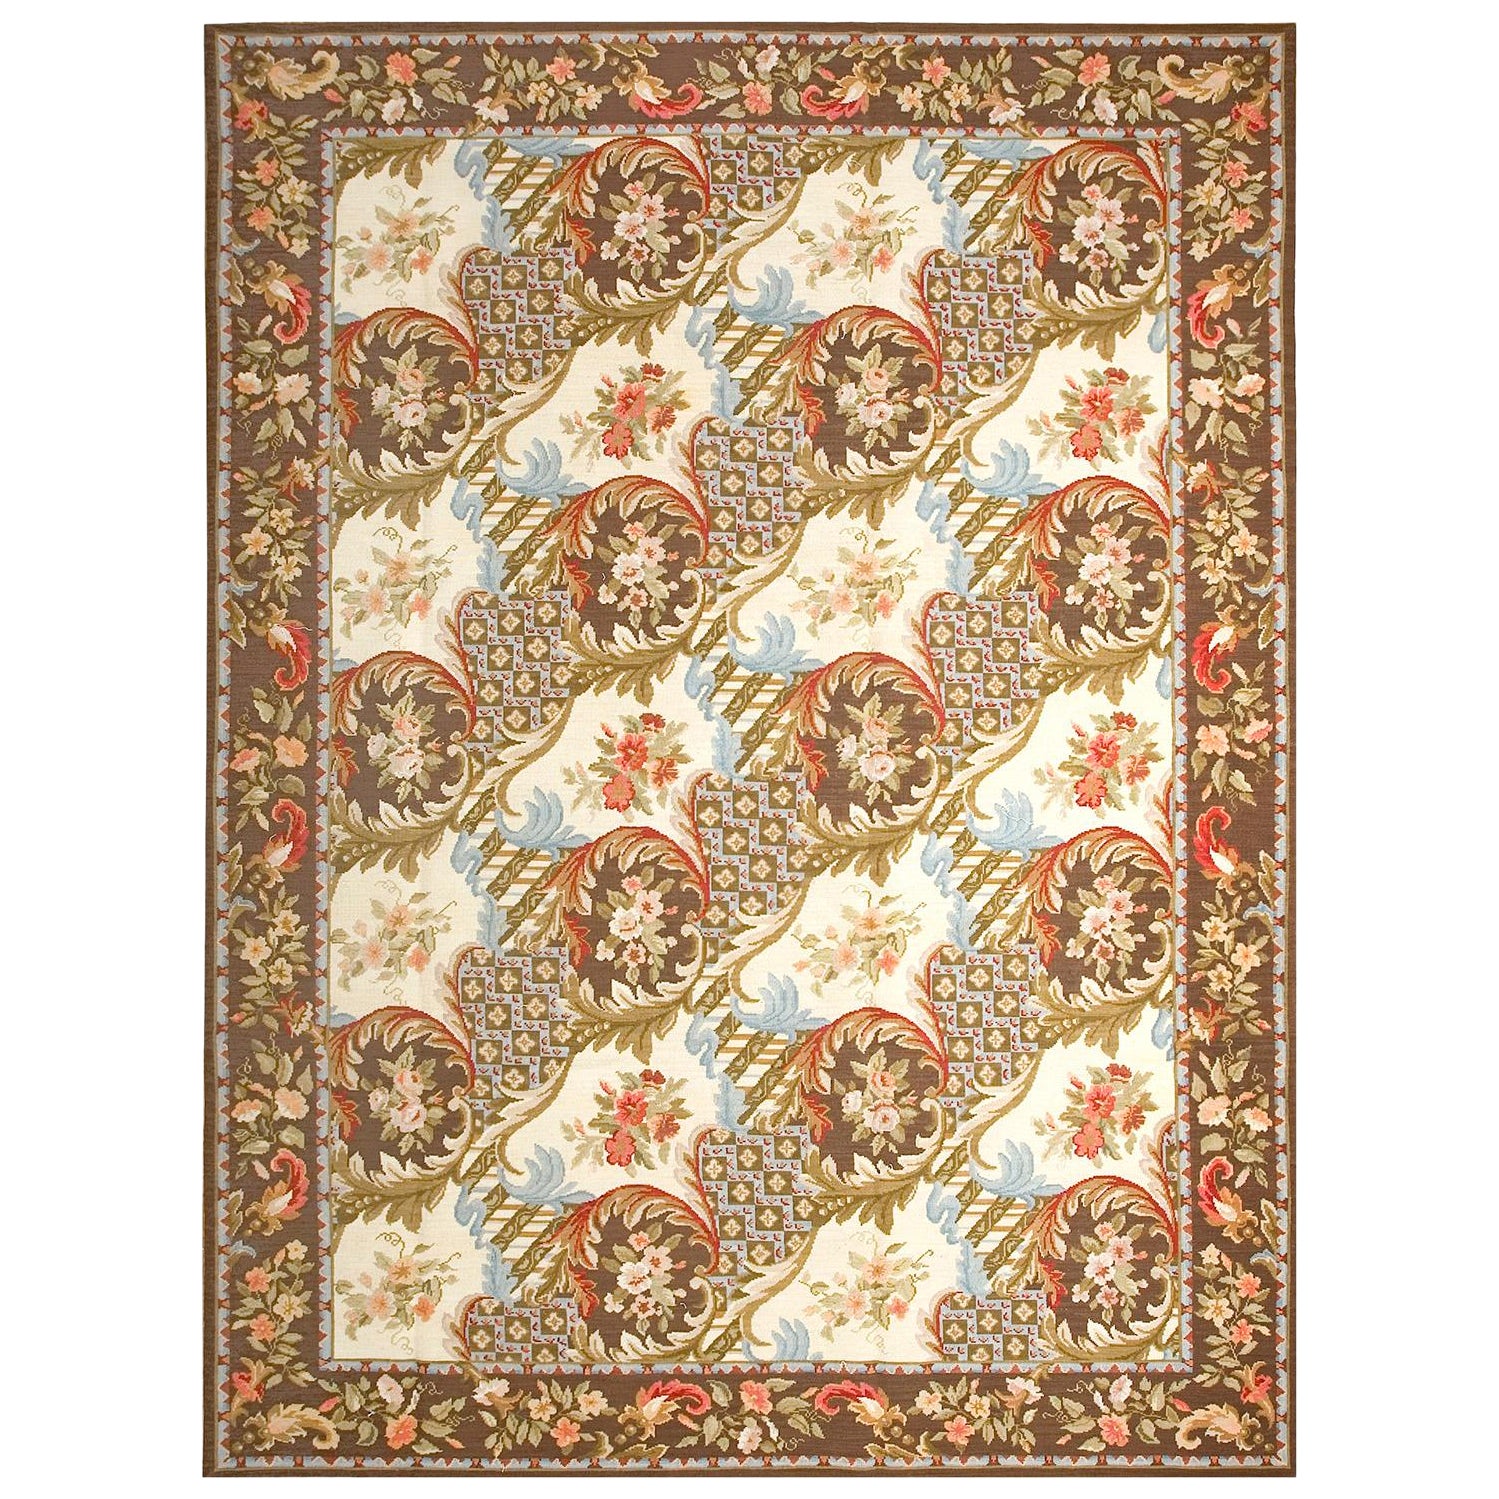 Contemporary Needlepoint Flat Weave Carpet (9' x 12' - 274 x 365)